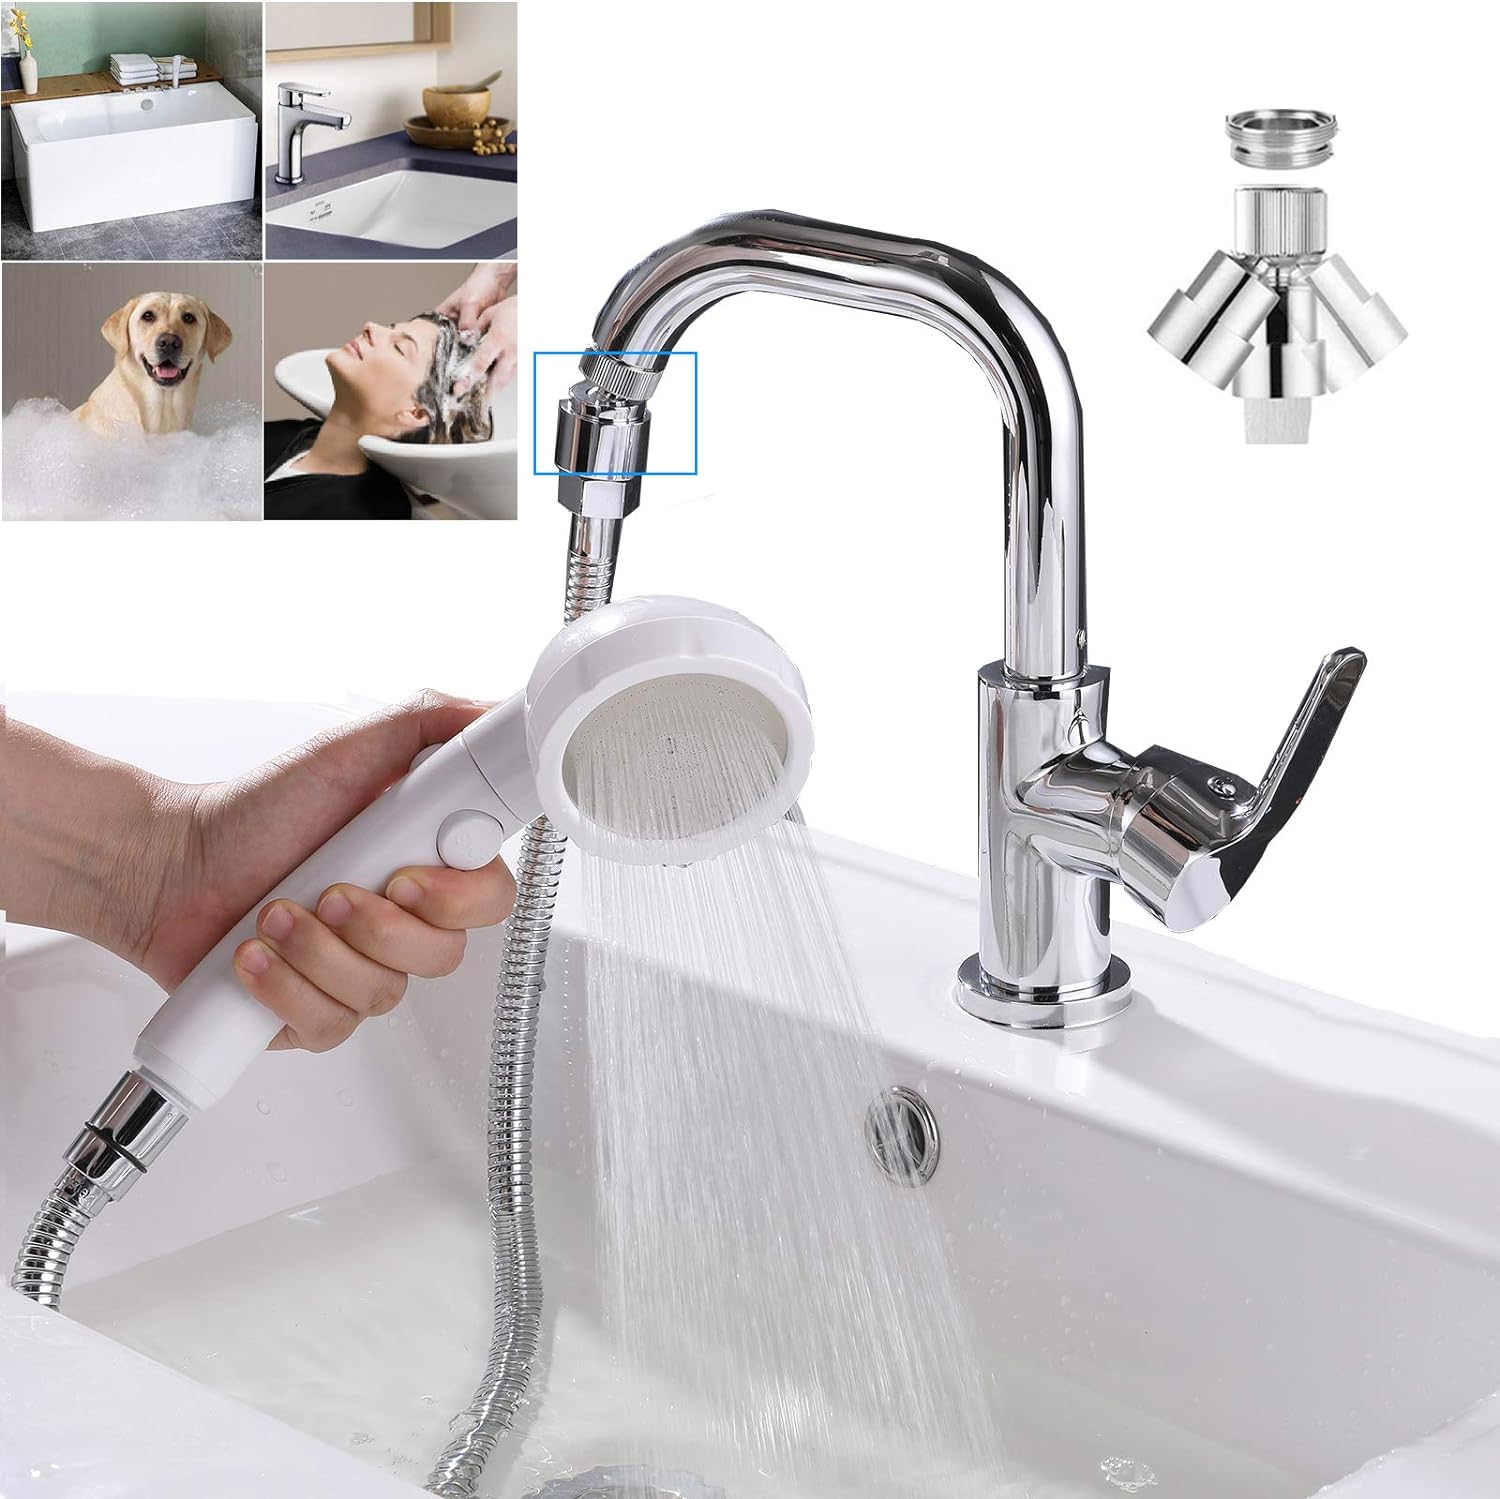 Qmlala Shower Adapter For Tub Faucet, Bathtub Faucet Sprayer Attachment